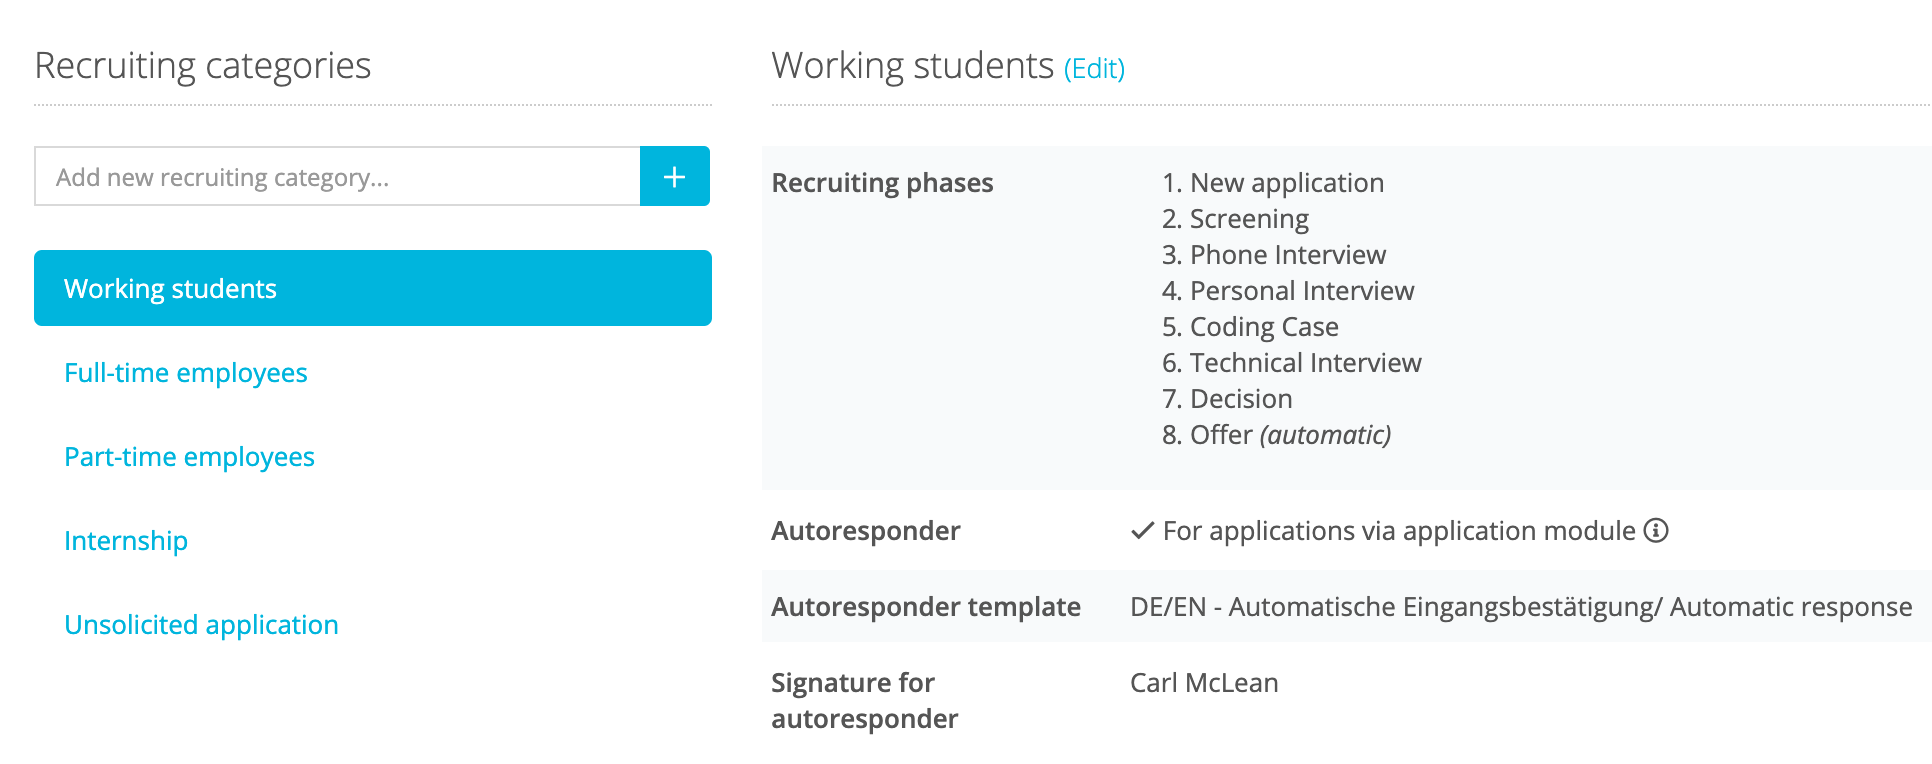 recruiting-categories-job-types_en-us.png